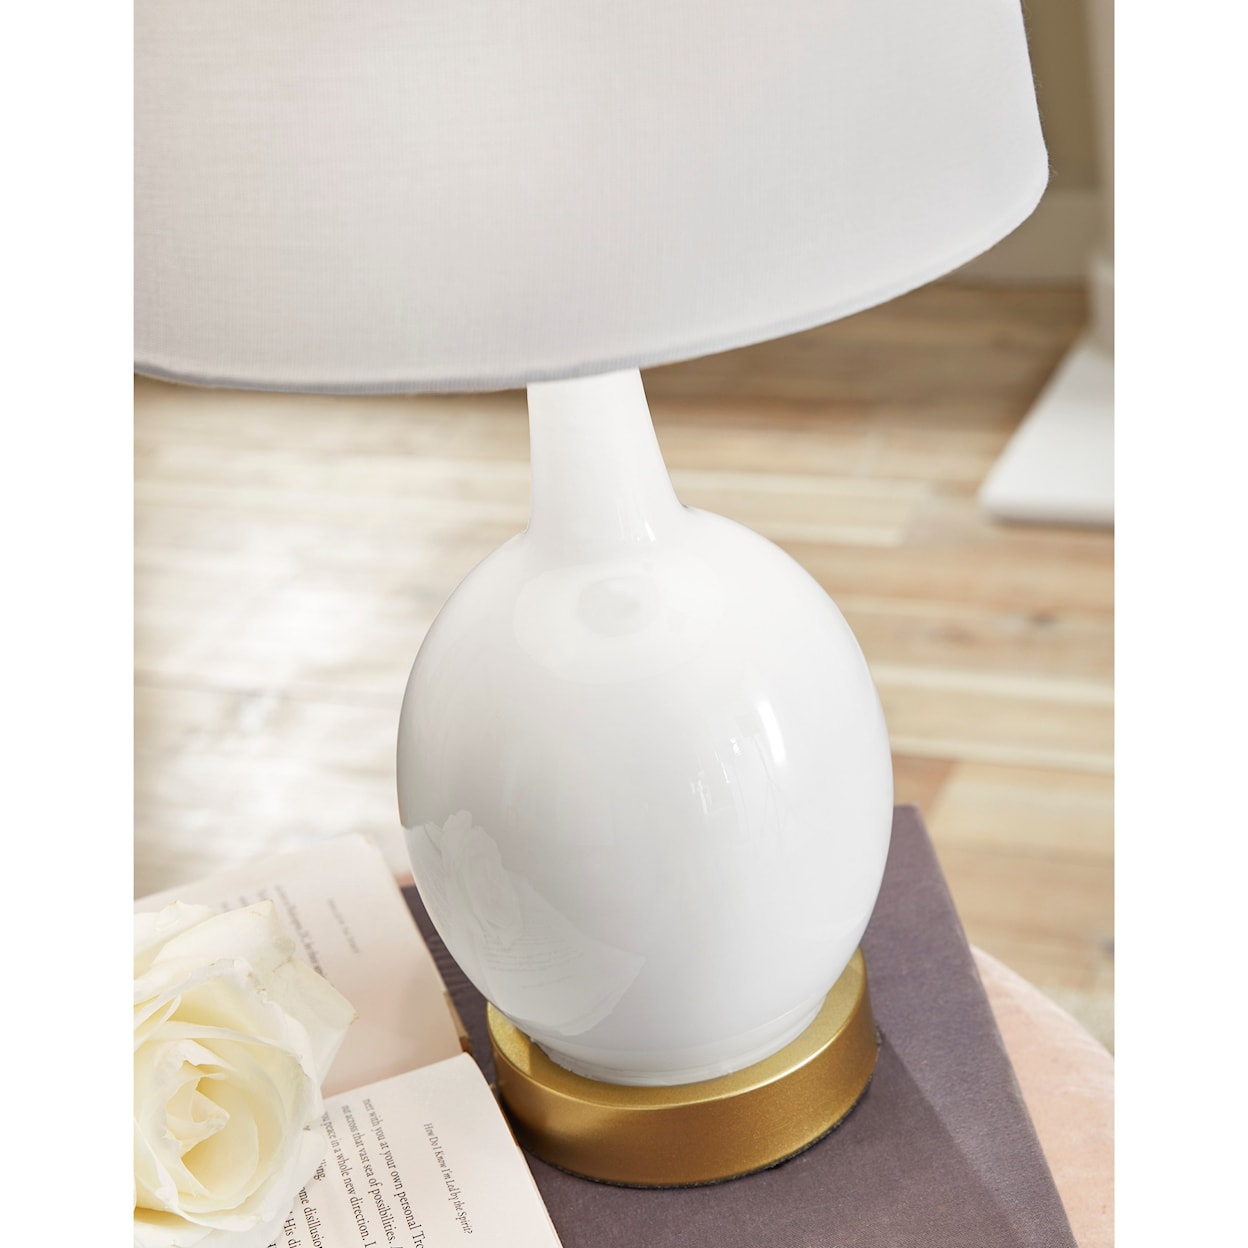 Signature Lamps - Contemporary Arlomore White Glass Table Lamp